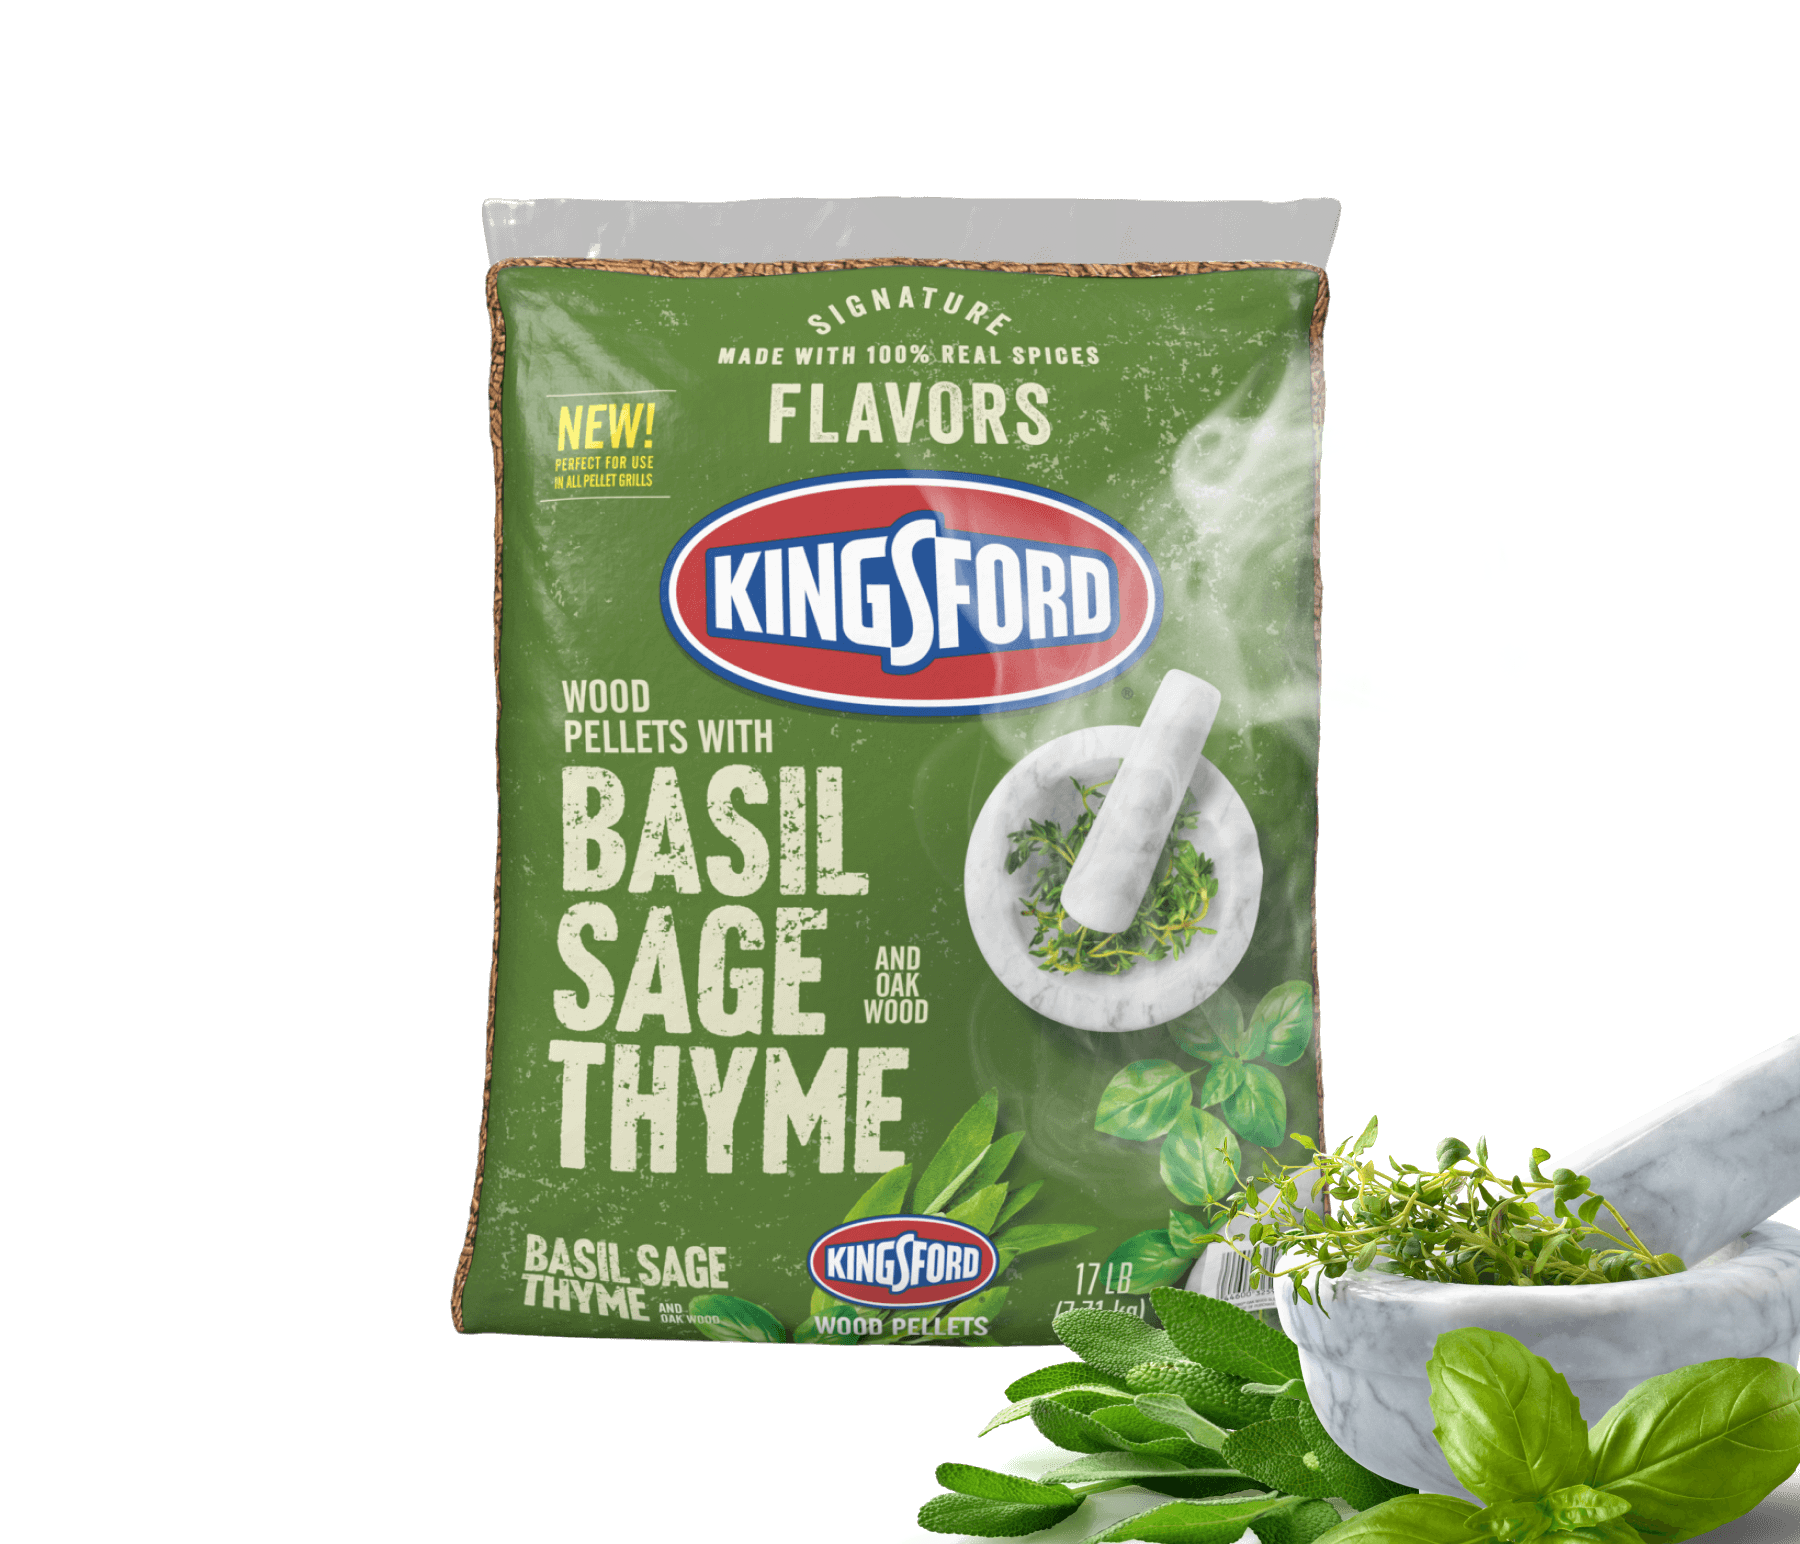 Kingsford® Signature Flavors Hardwood Pellets — Basil Sage Thyme